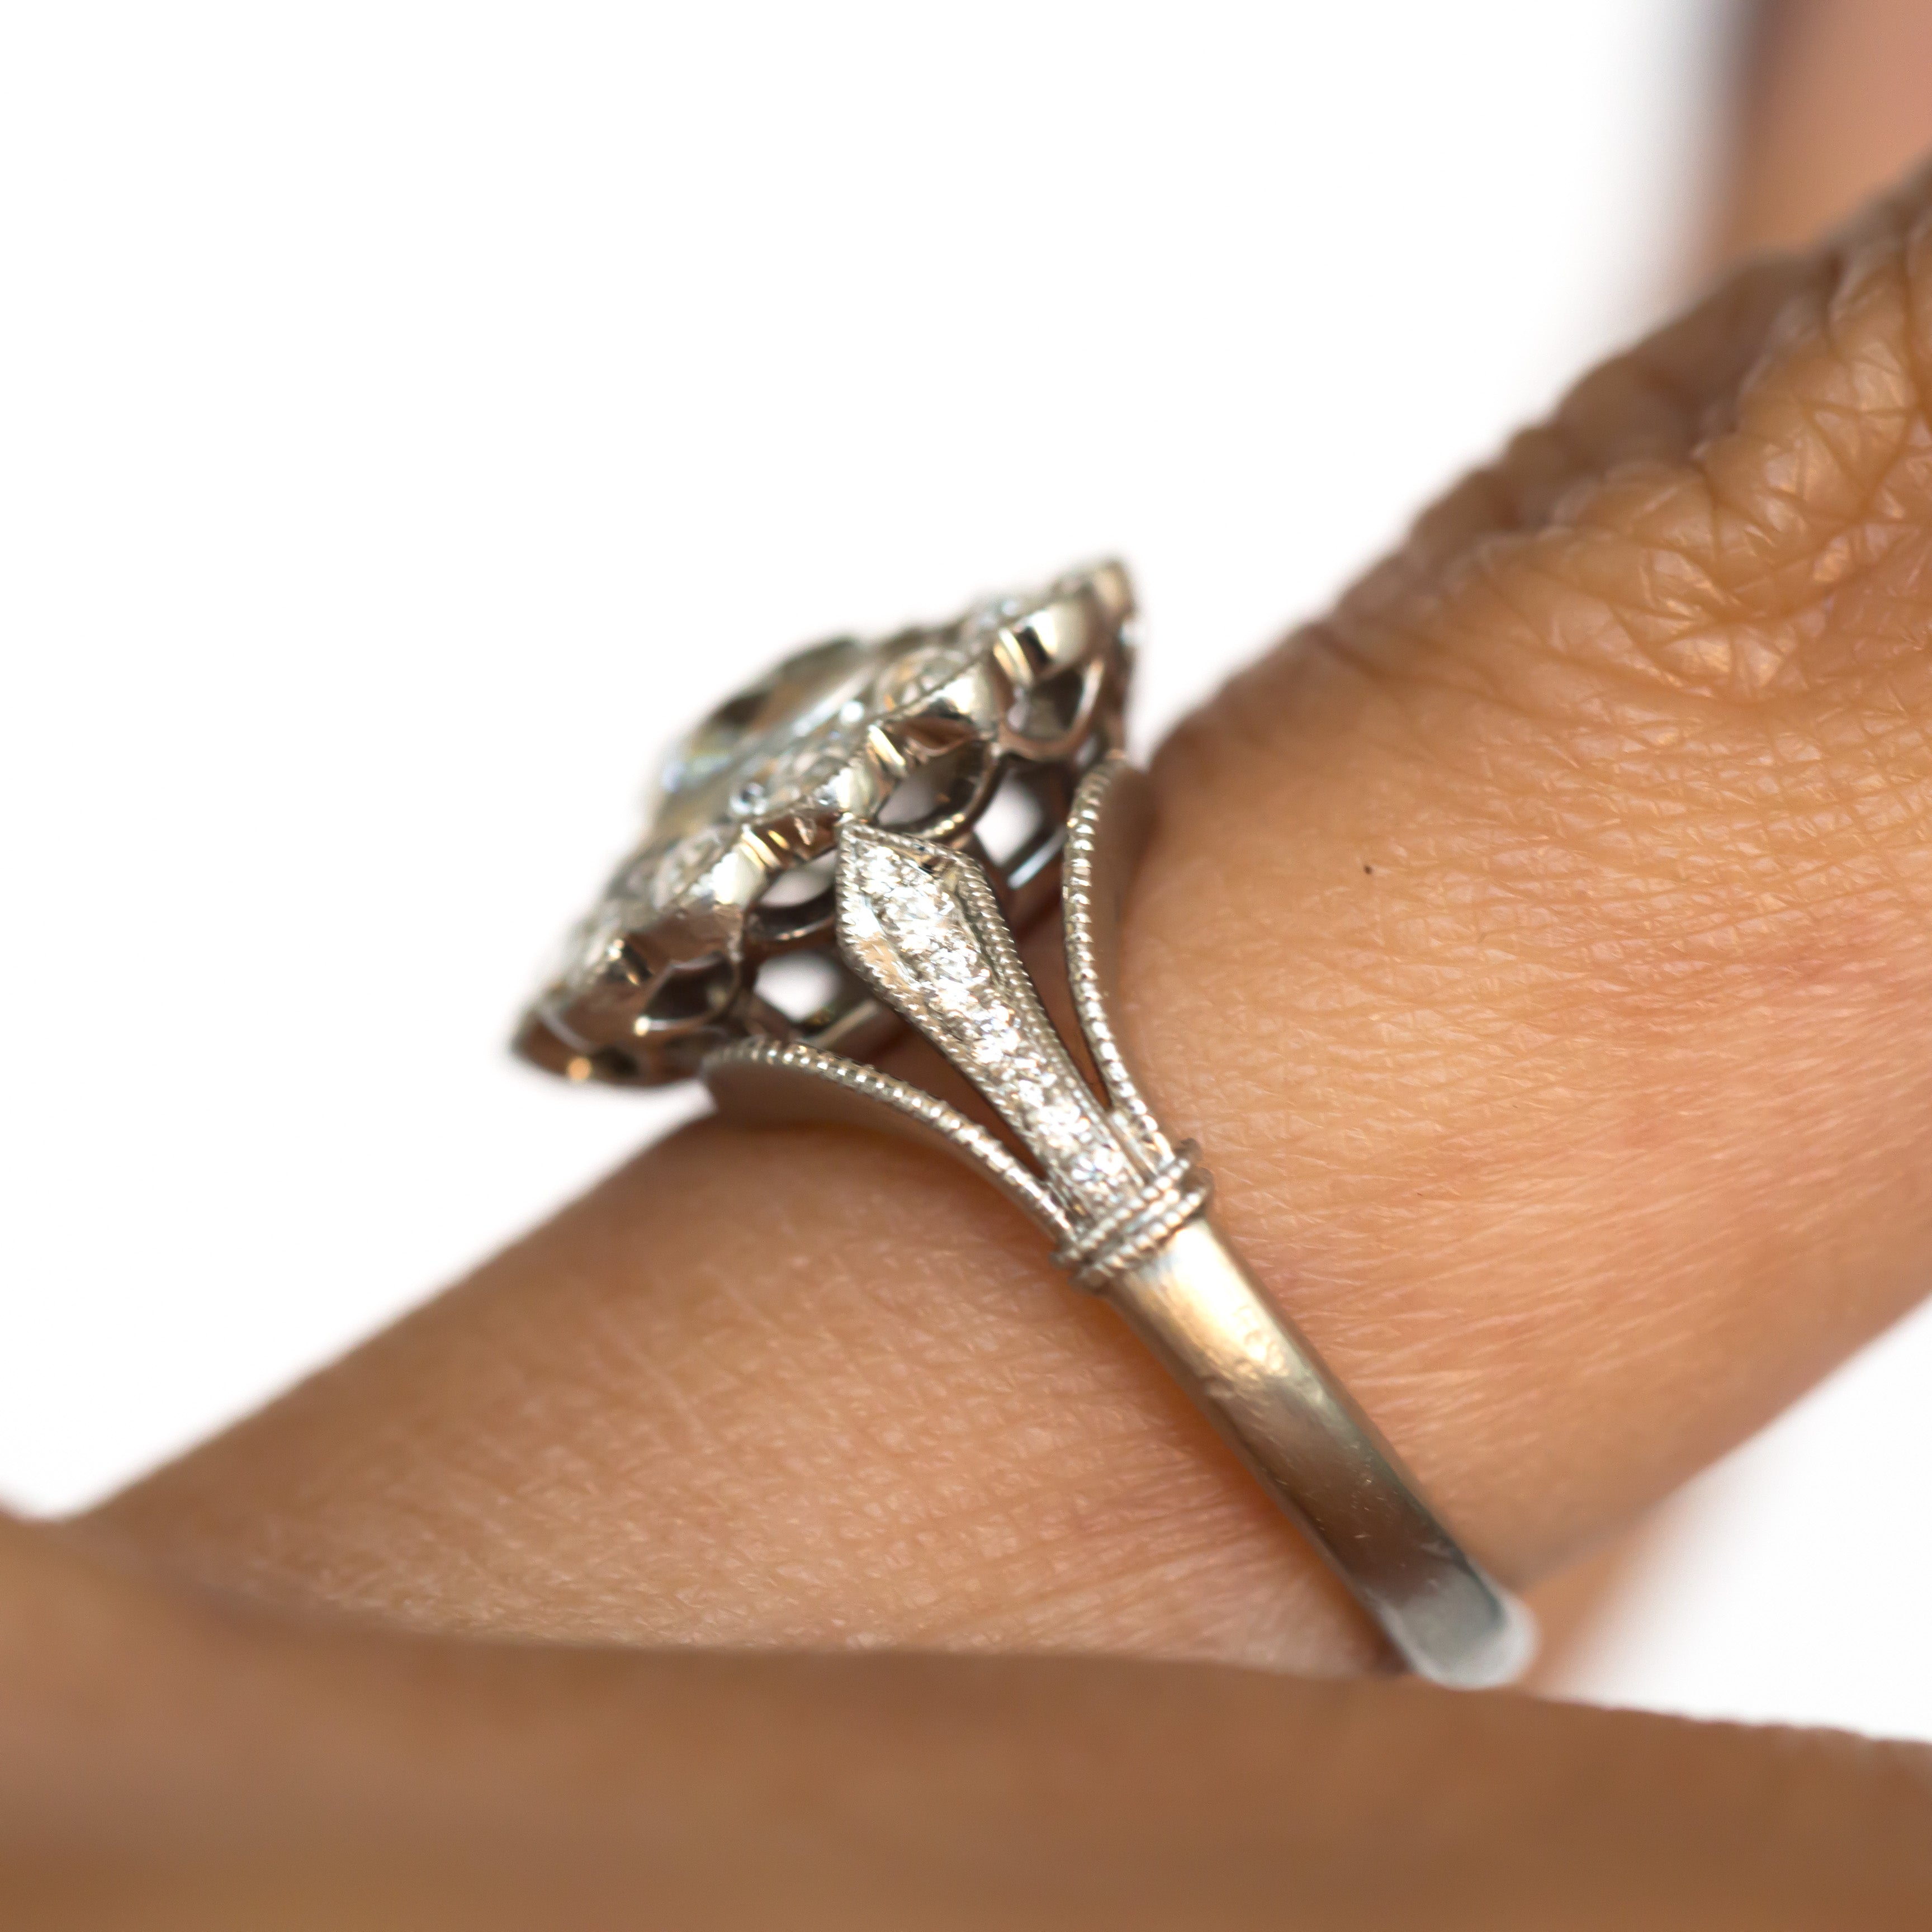 G & H Jewelers, Inc. - Jewelry - California, MD - WeddingWire